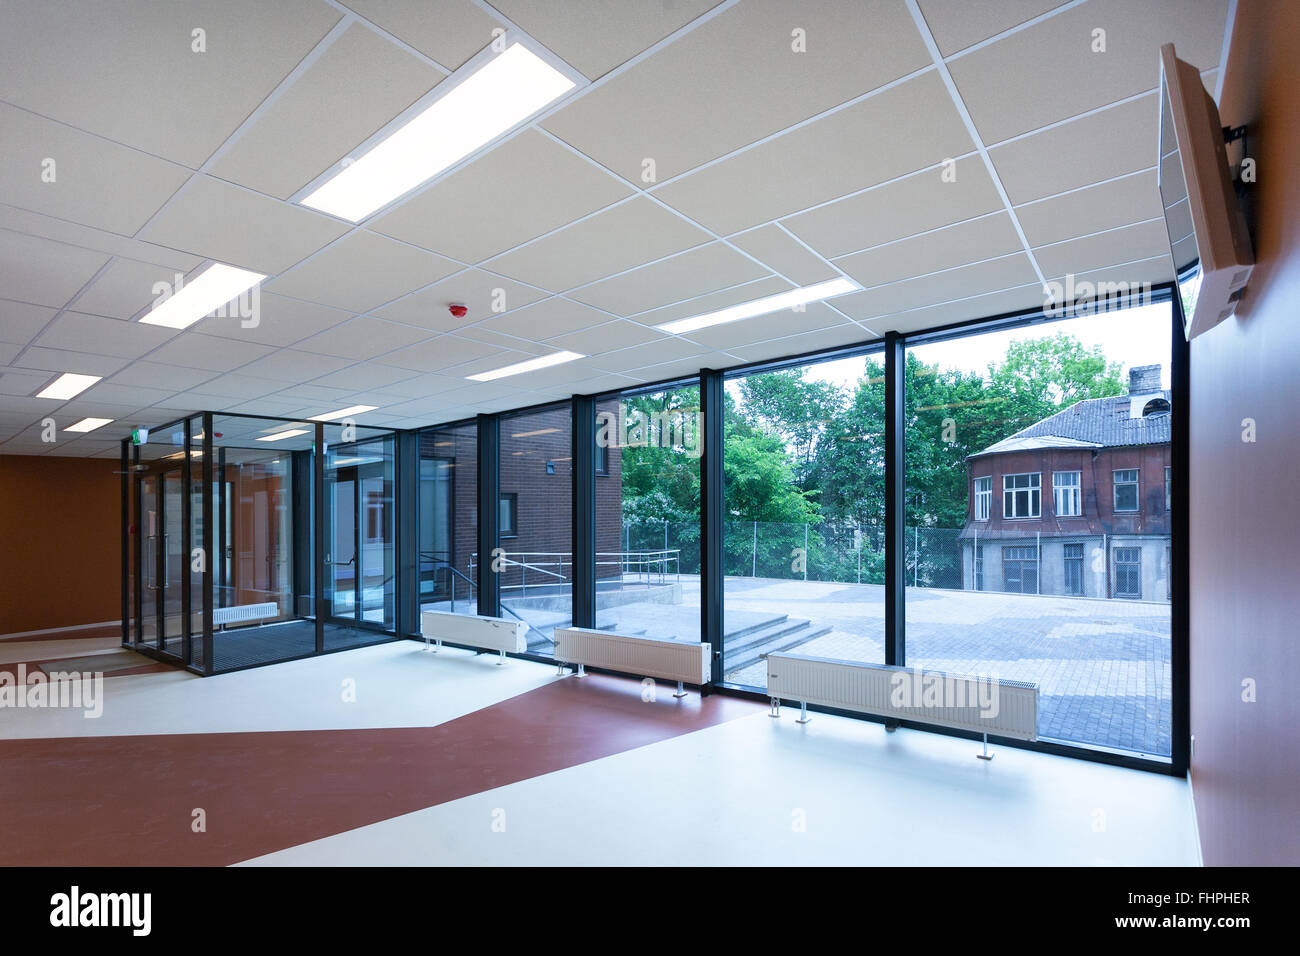 Estonia, Tartu, Heino Eller's Music school, empty corridor, large windows Stock Photo